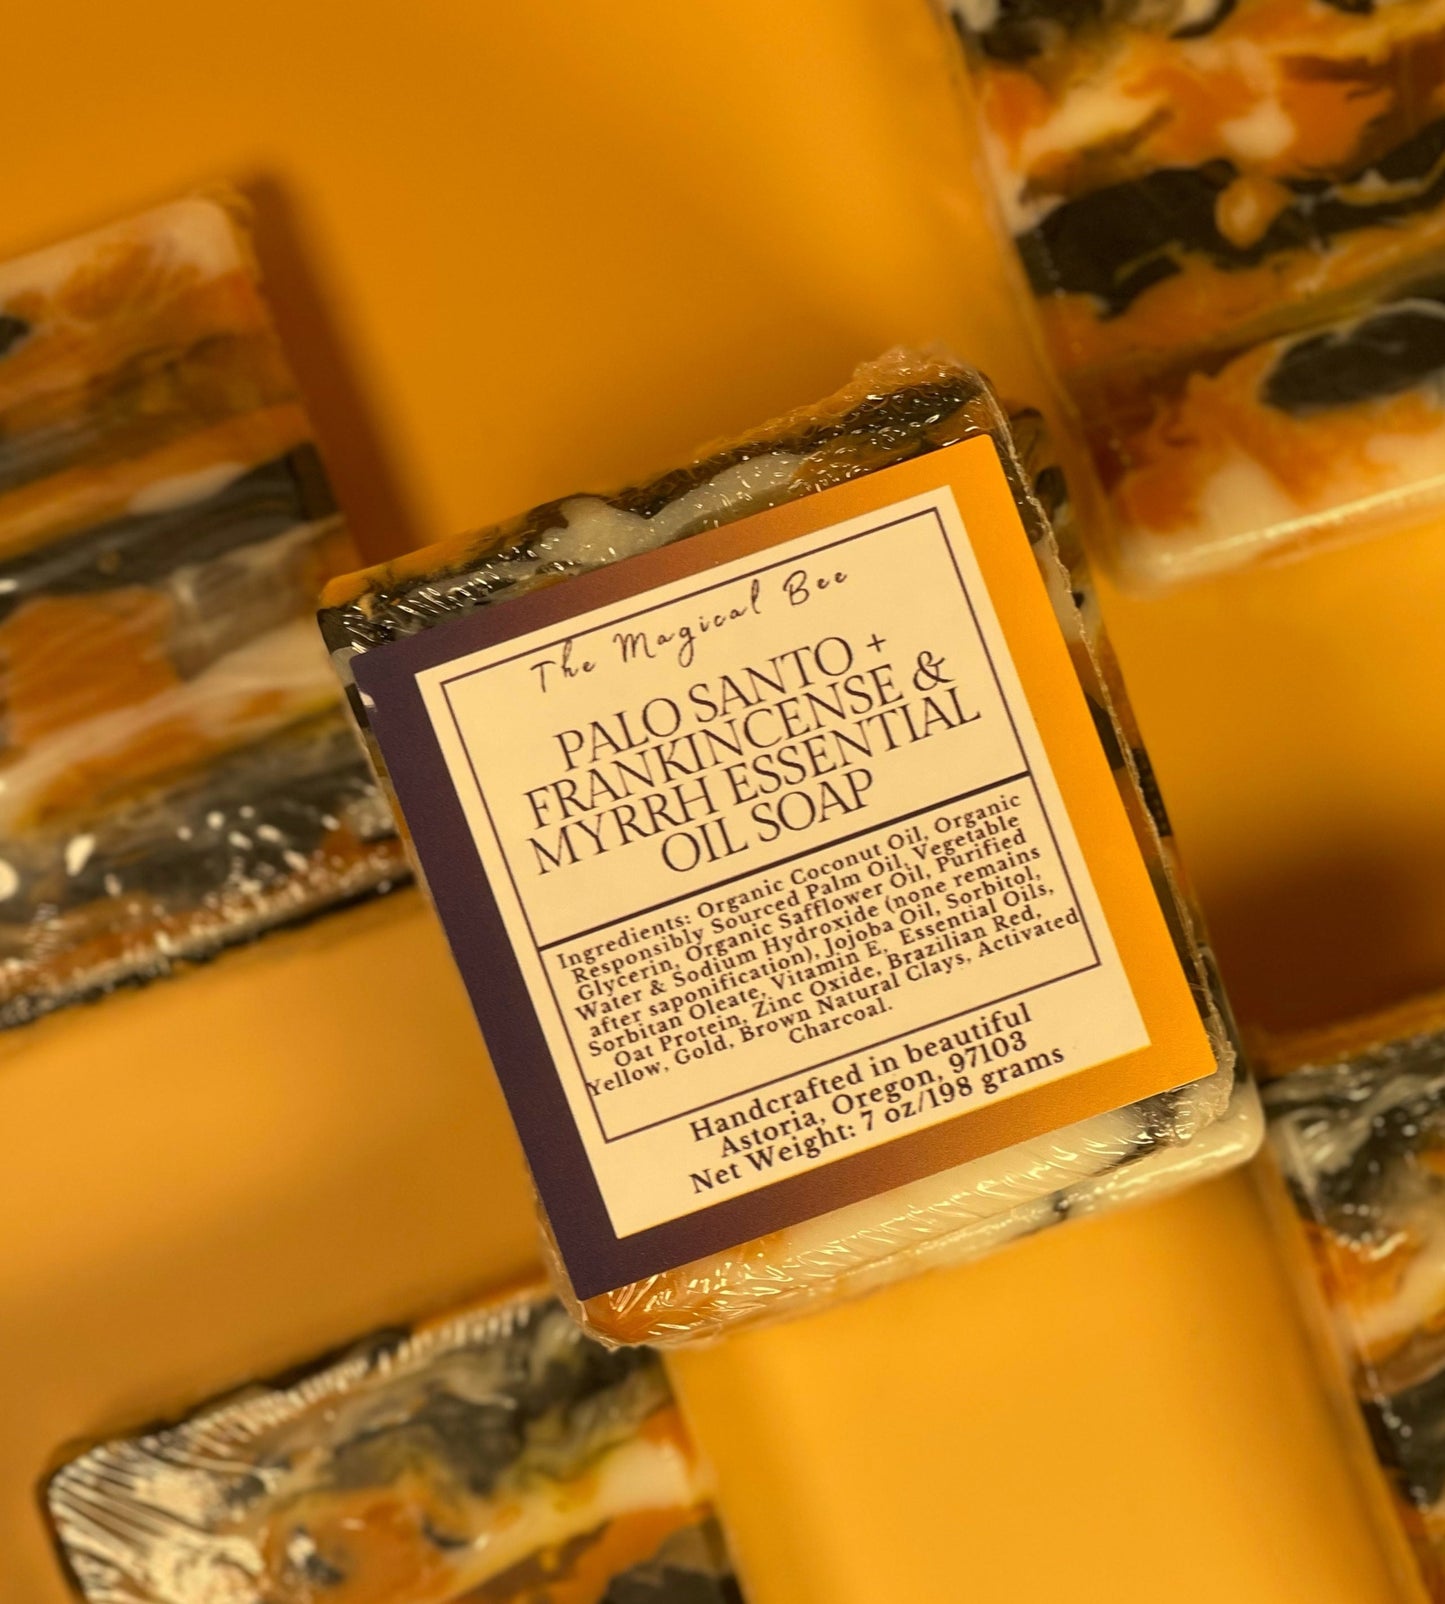 Palo Santo + Frankincense & Myrrh Essential Oil Soap